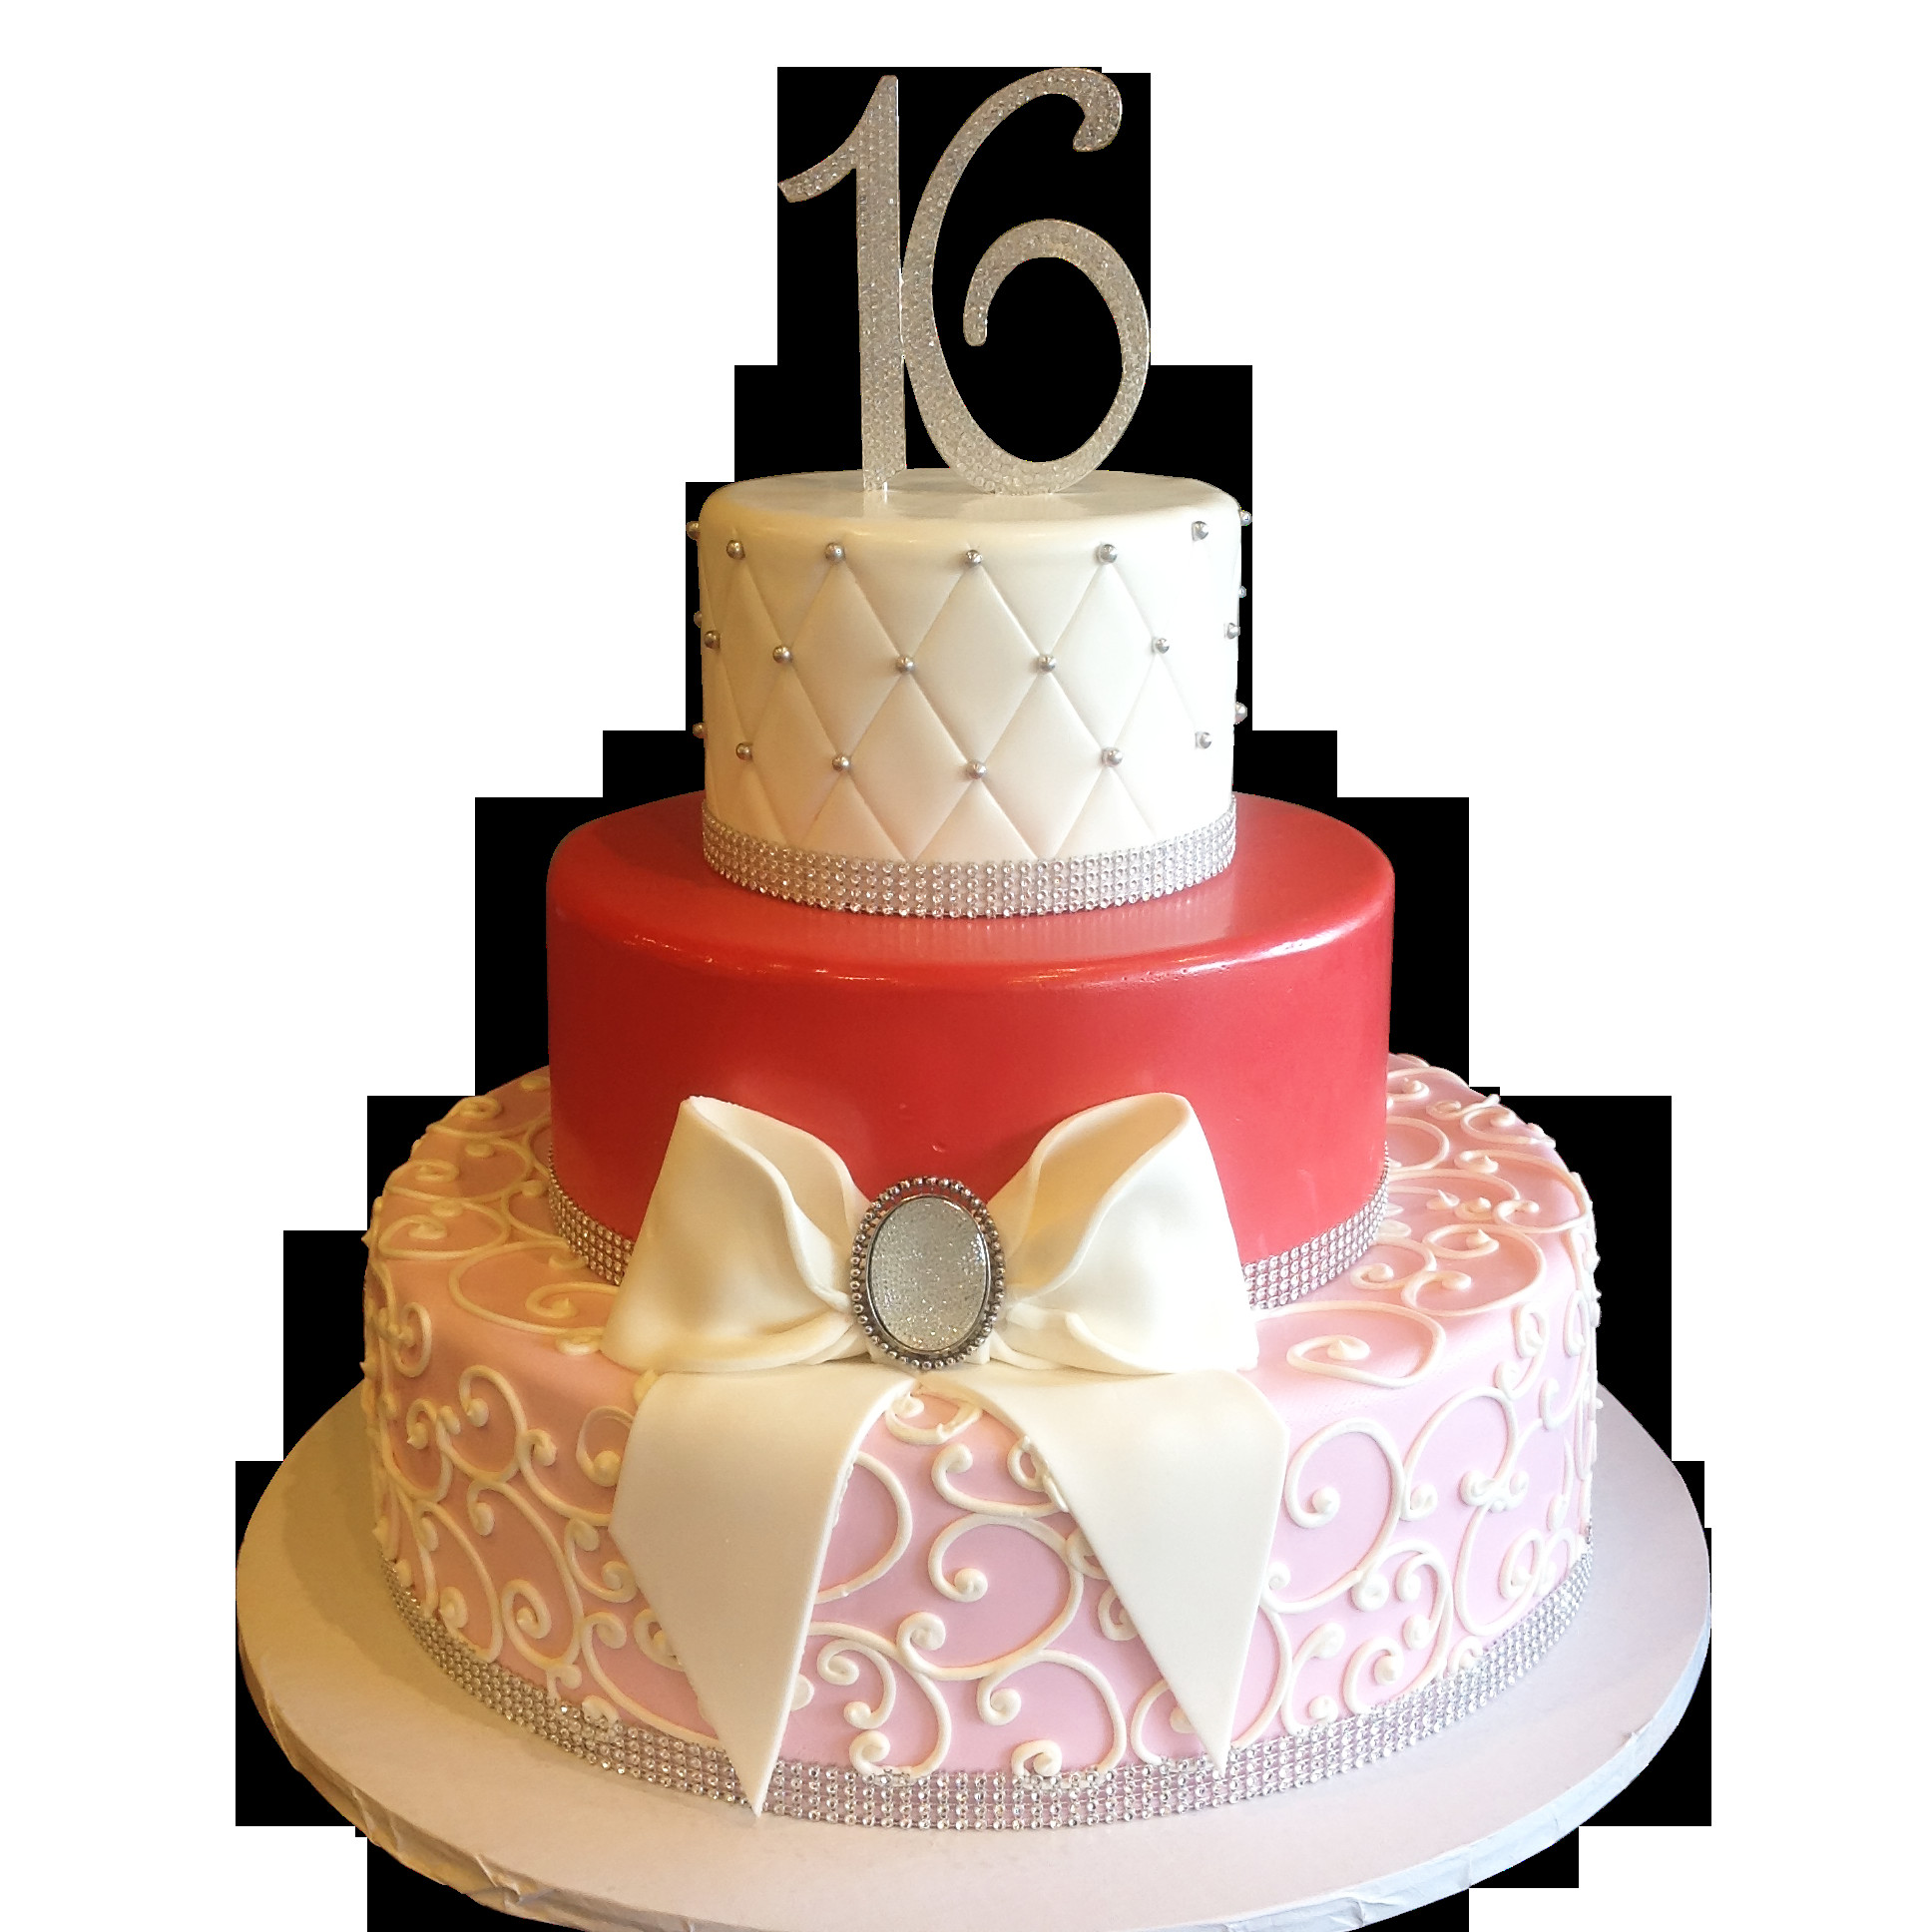 Sweet 16 Birthday Cakes
 Elegant Sweet 16 Birthday Cakes in NYC